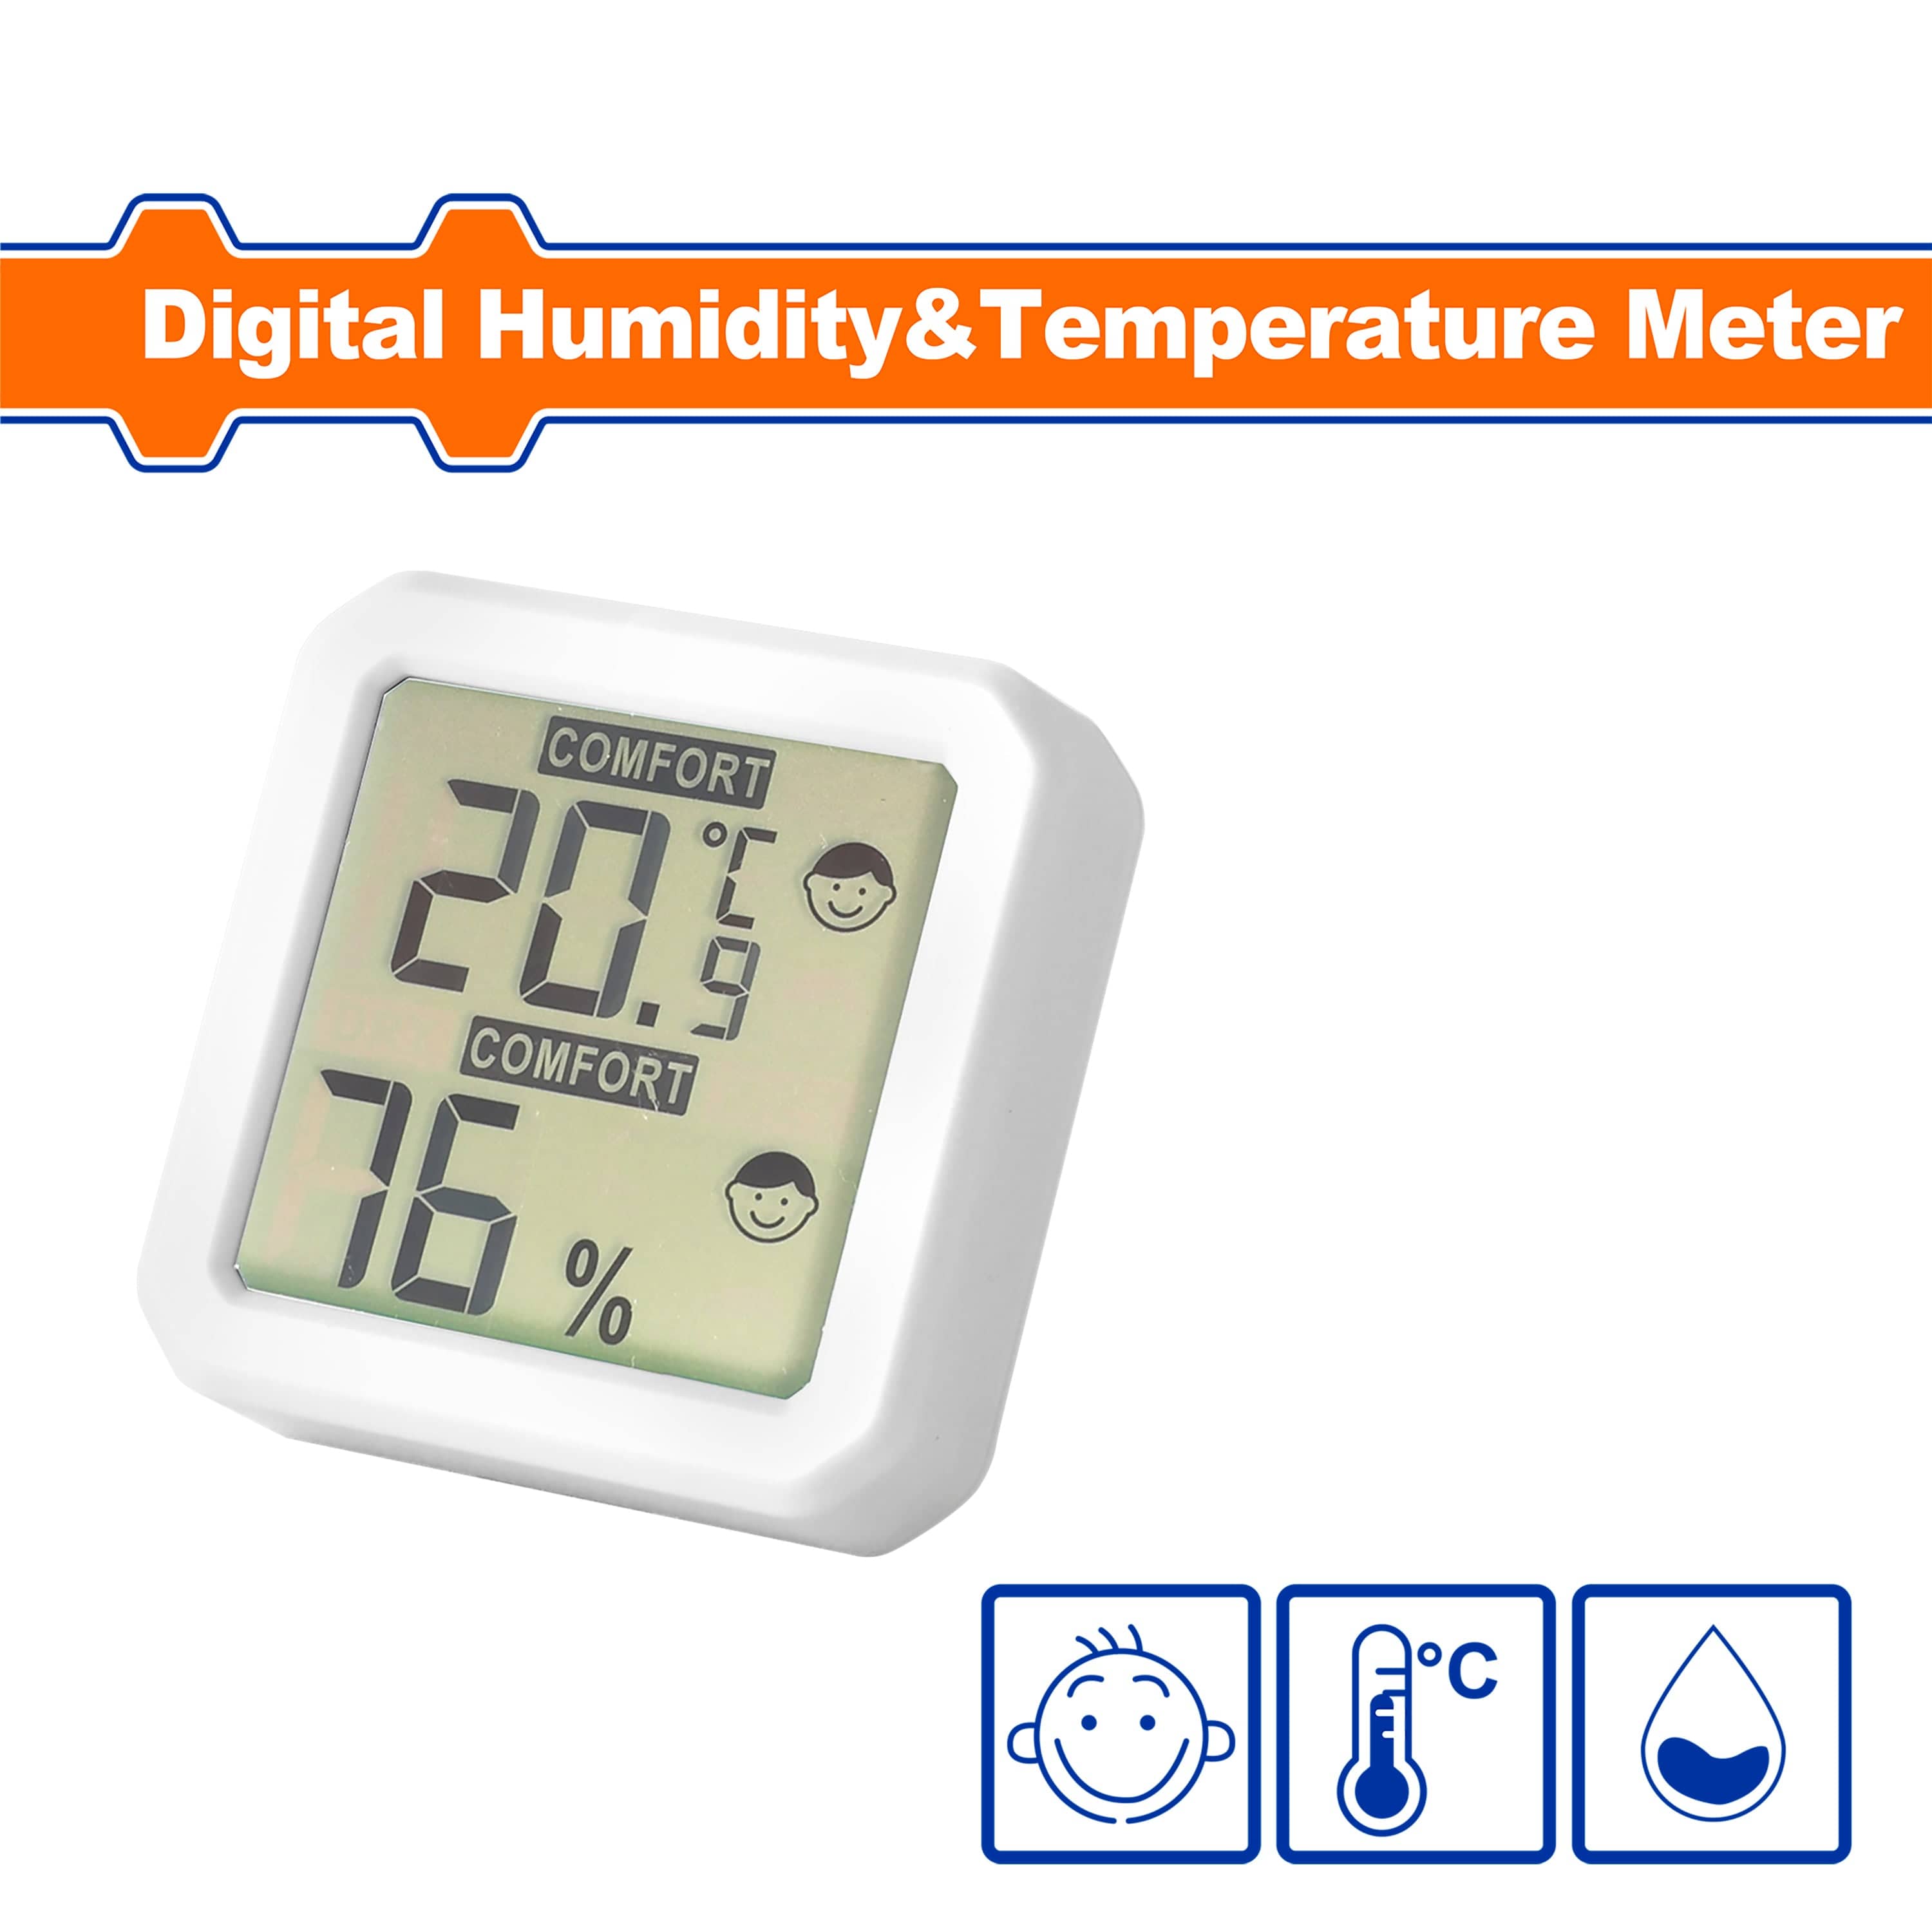 Buy Wadfow Digital Humidity & Temperature Meter - WTM1501 in Accra, Ghana | Supply Master Digital Meter Buy Tools hardware Building materials